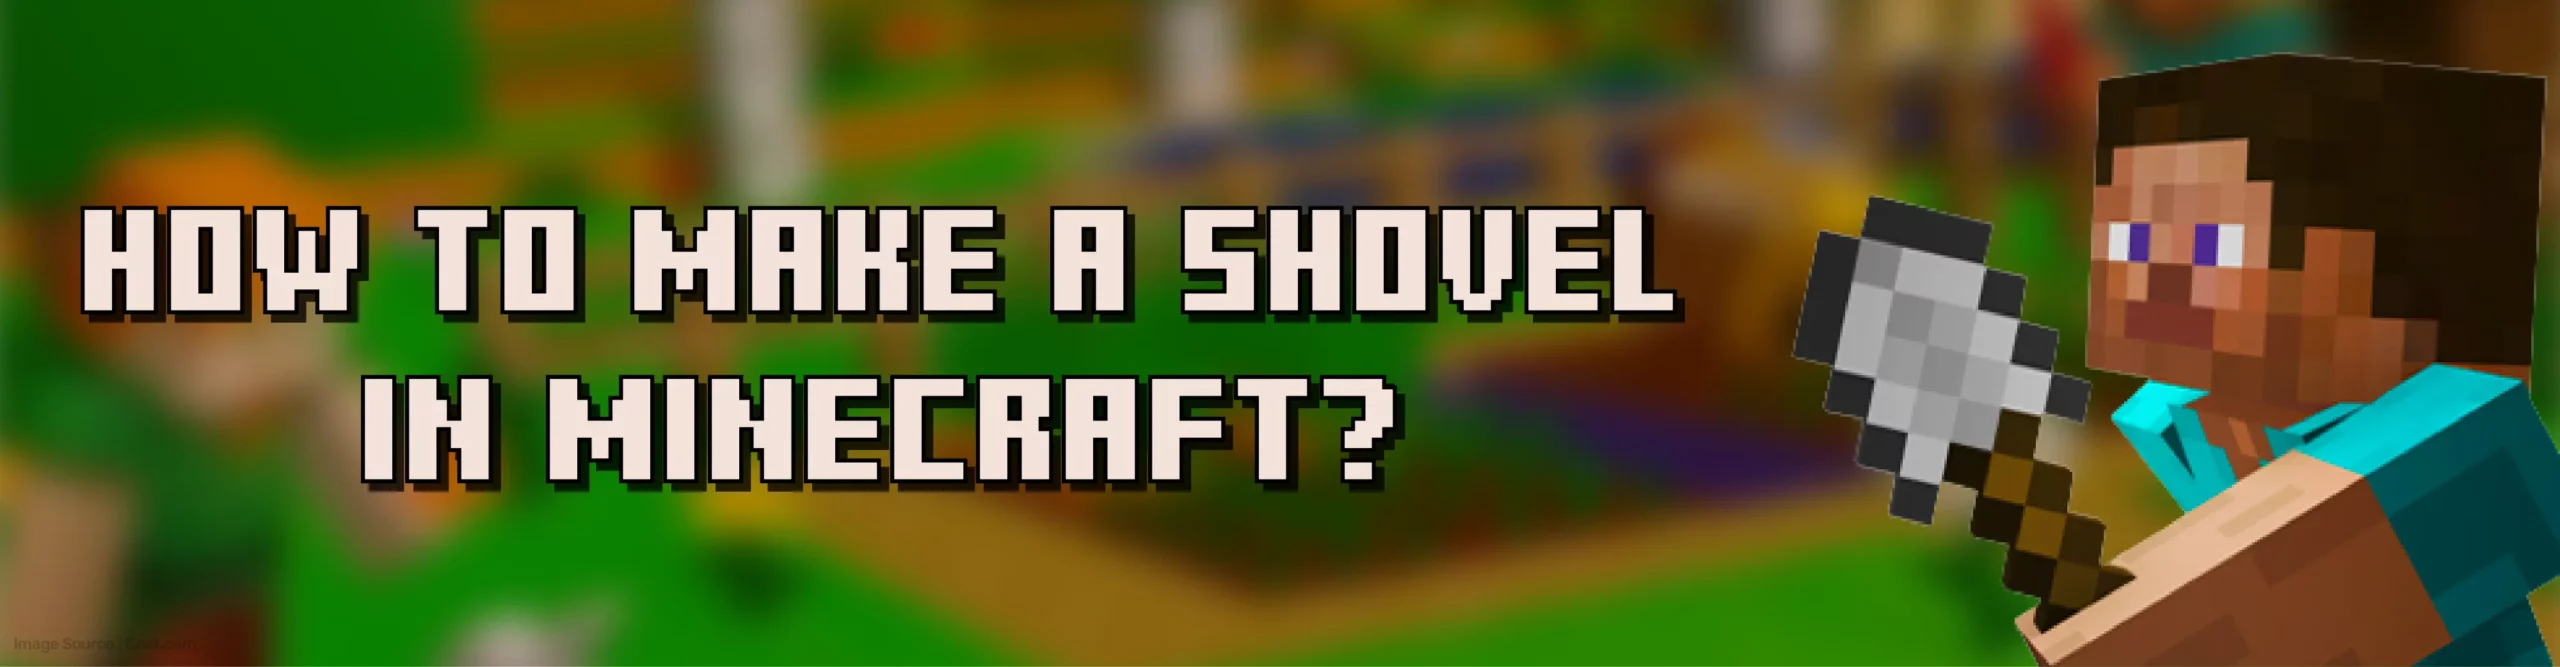 shovel in minecraft